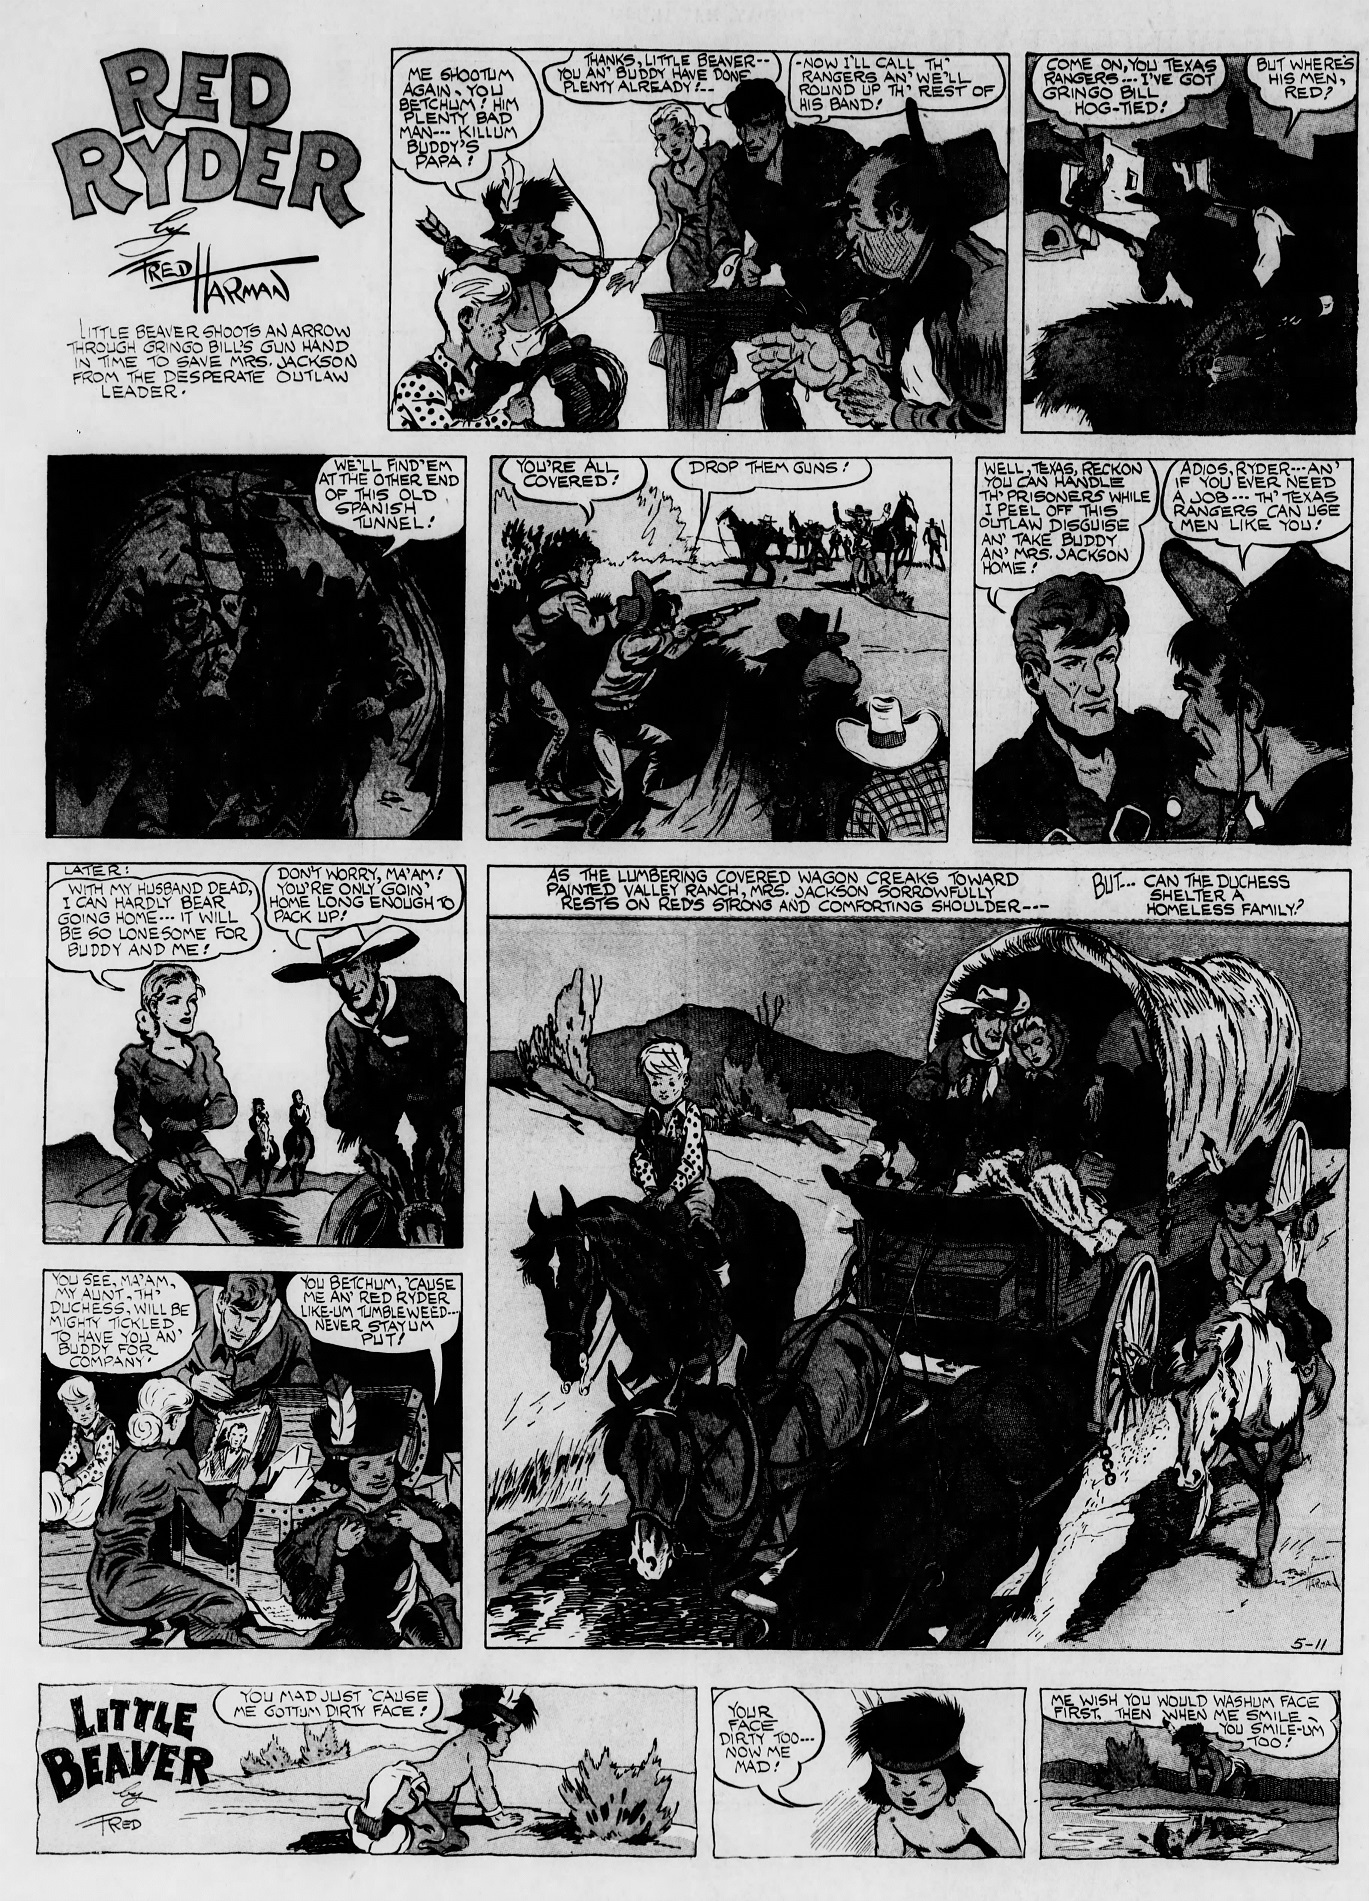 The_Brooklyn_Daily_Eagle_Sun__May_11__1941_(9).jpg